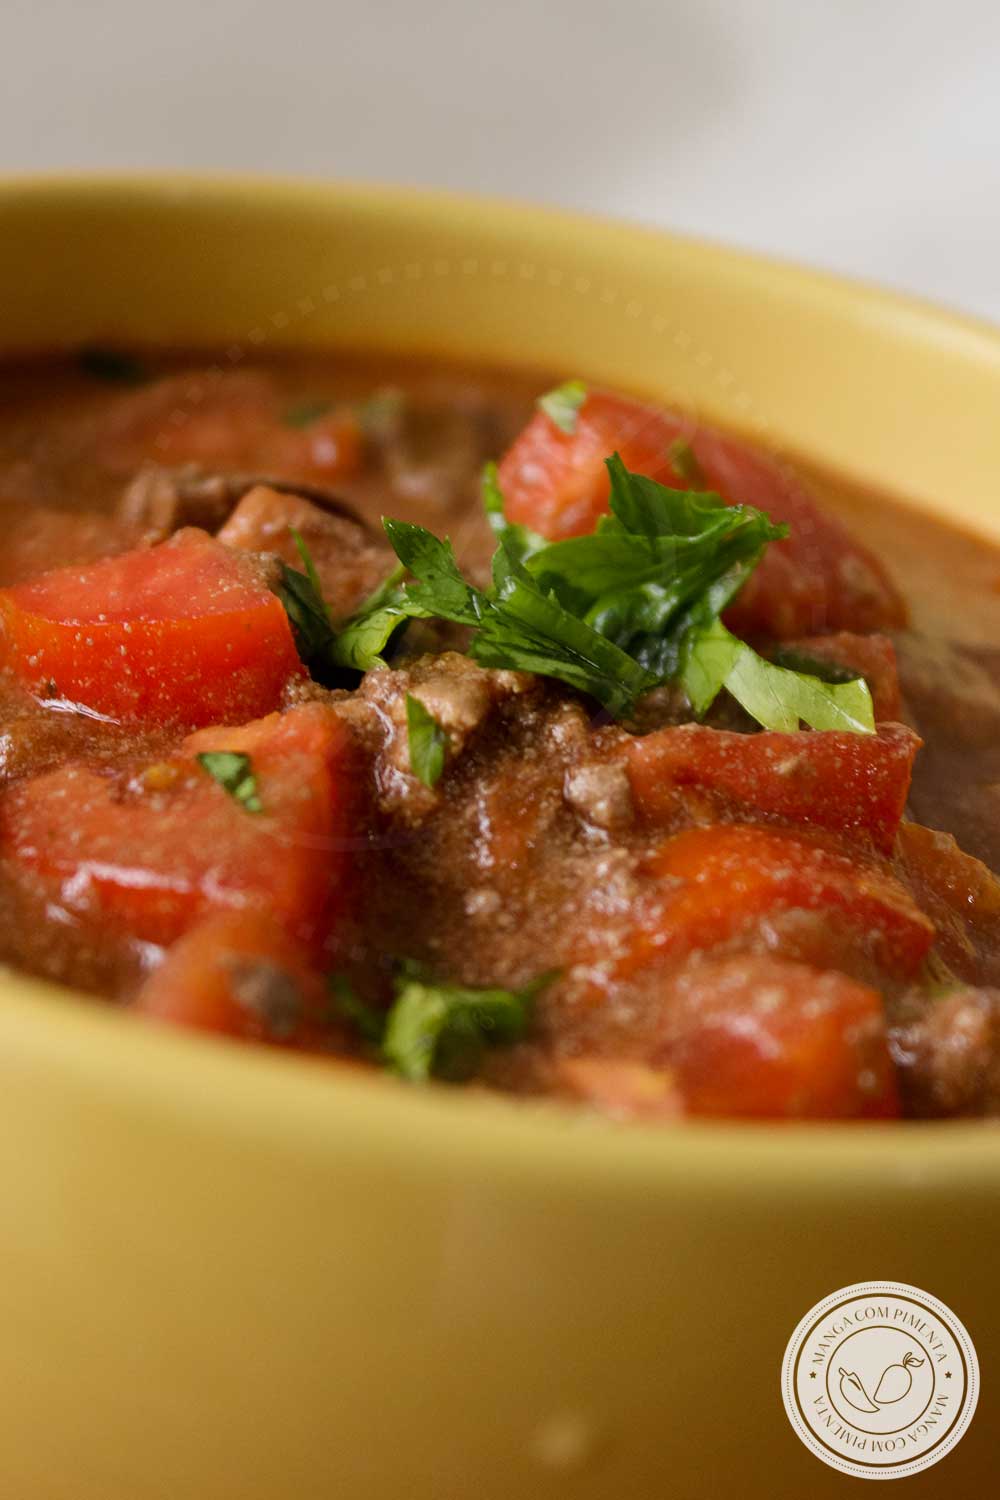 Receita de Ragu de Fígado de Galinha - um prato caseiro, nutritivo e delicioso para o almoço ou jantar!